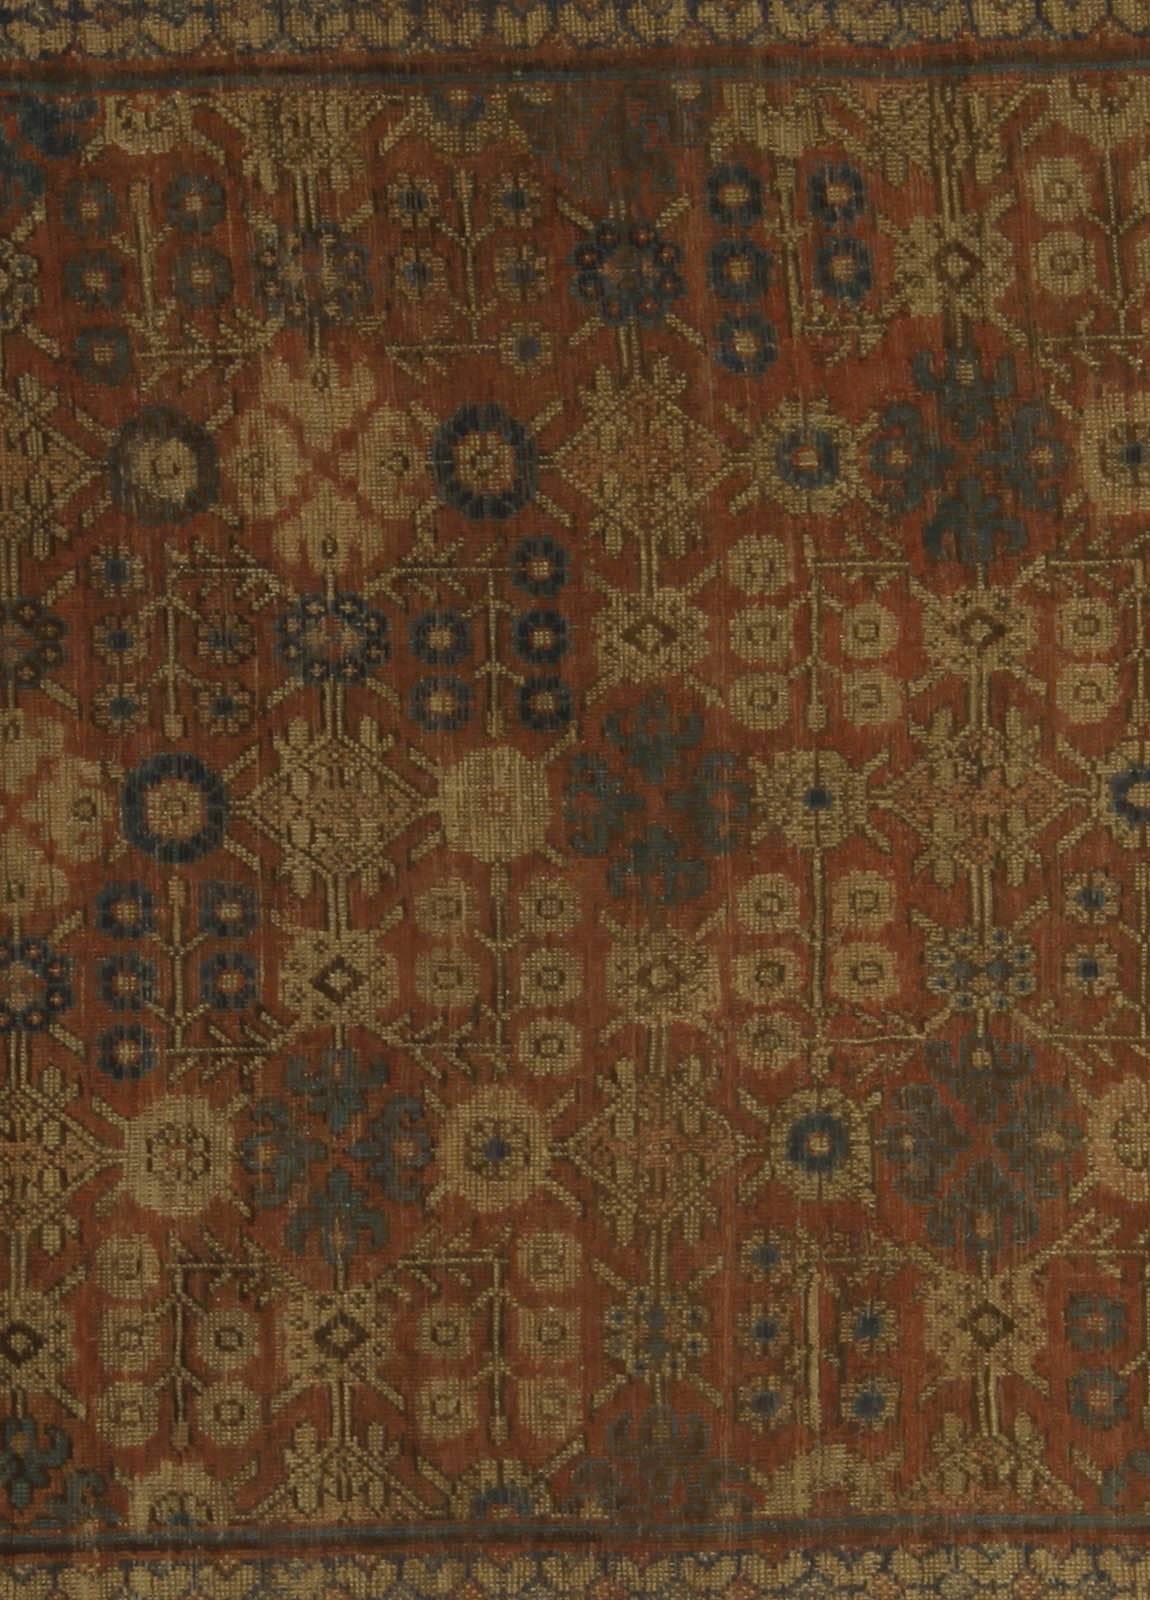 Vintage Samarkand 'Khotan' Handmade Wool Rug
Size: 5'4